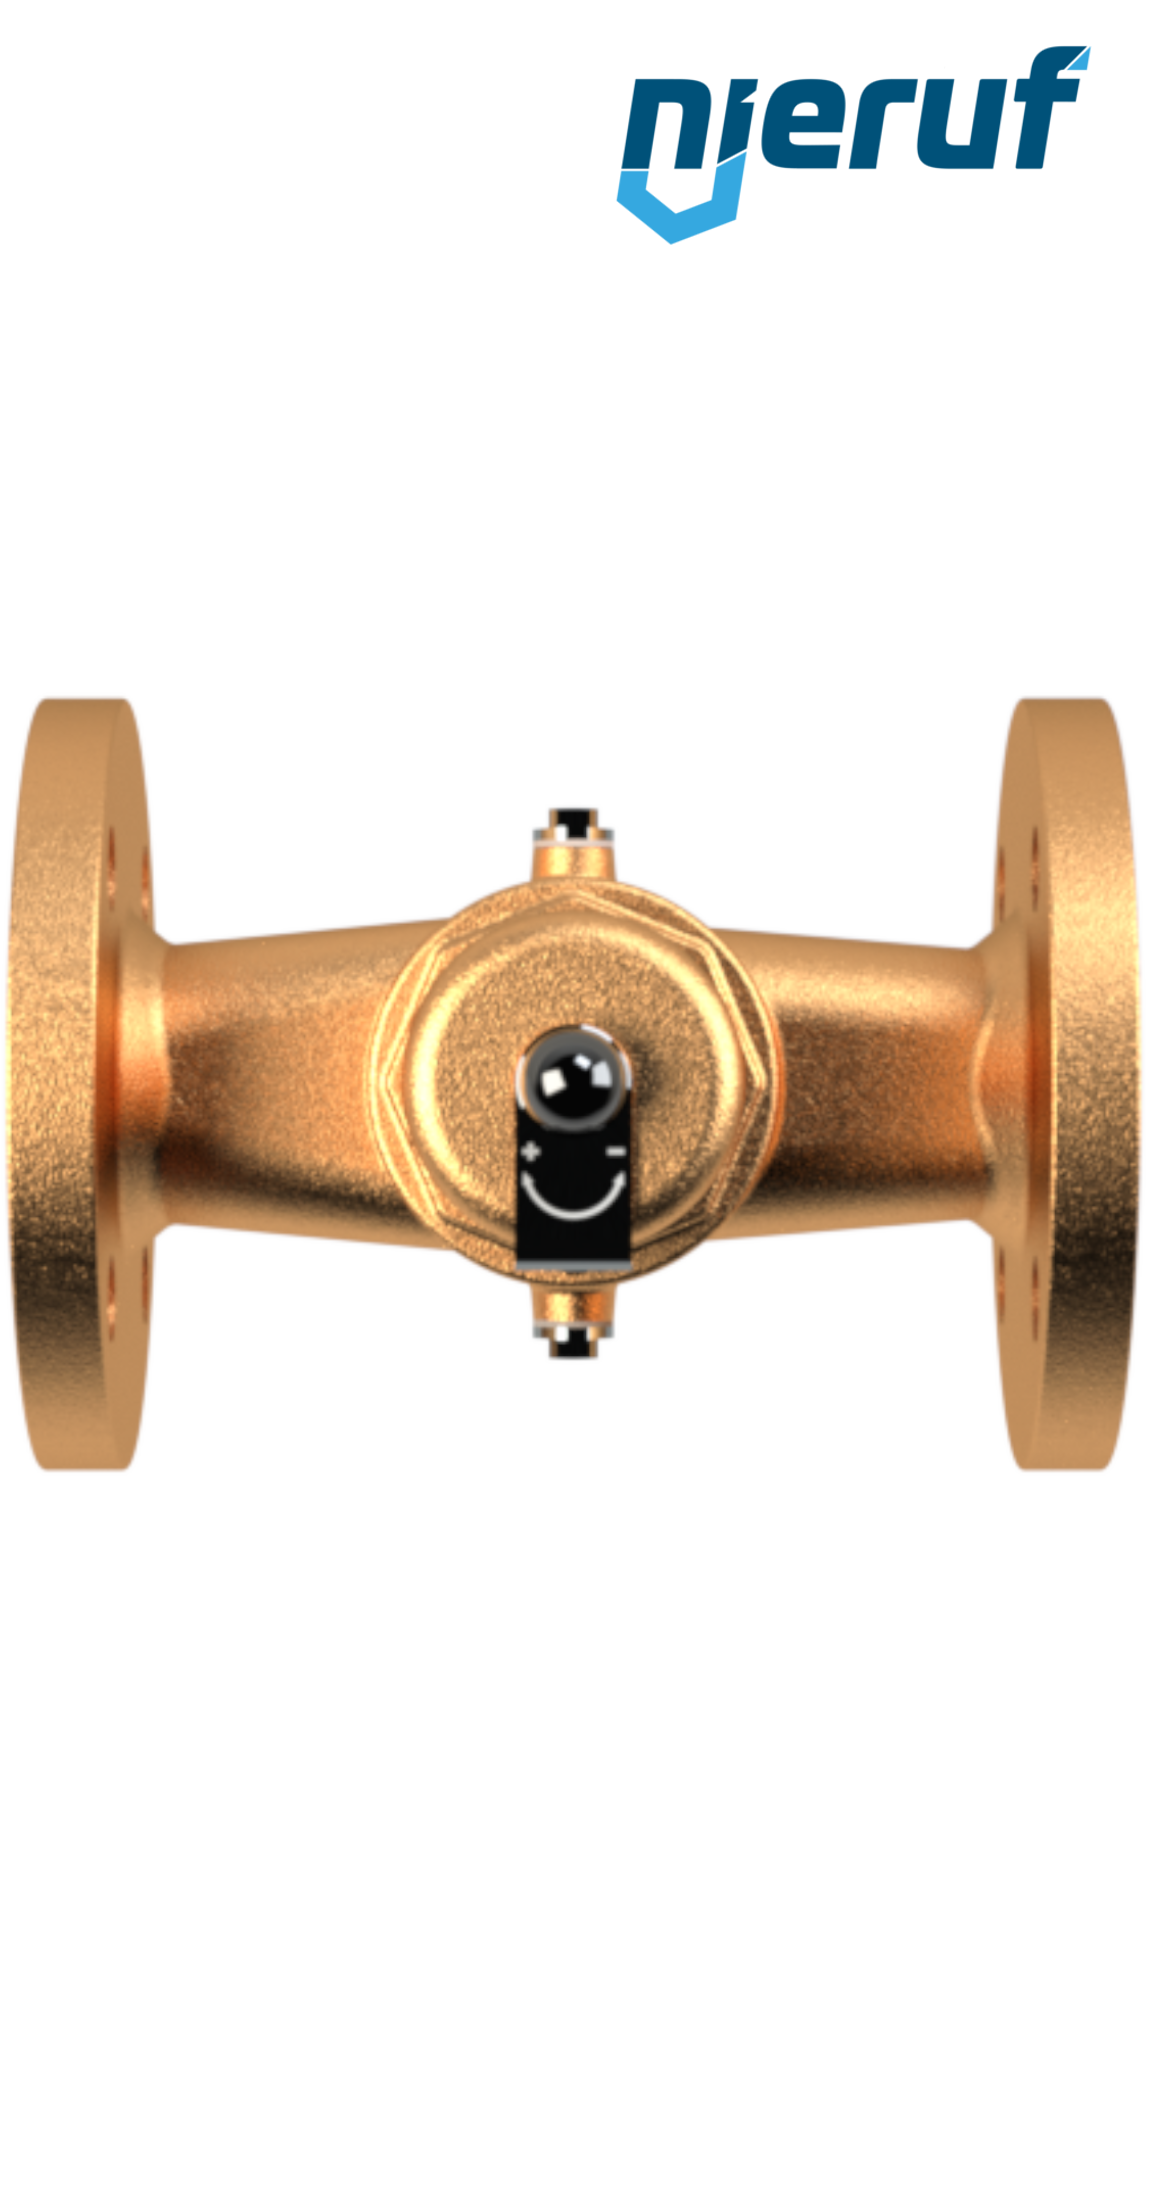 pressure reducing valve DN 25 PN40 DM06 gunmetal/brass FKM 5.0 - 15.0 bar